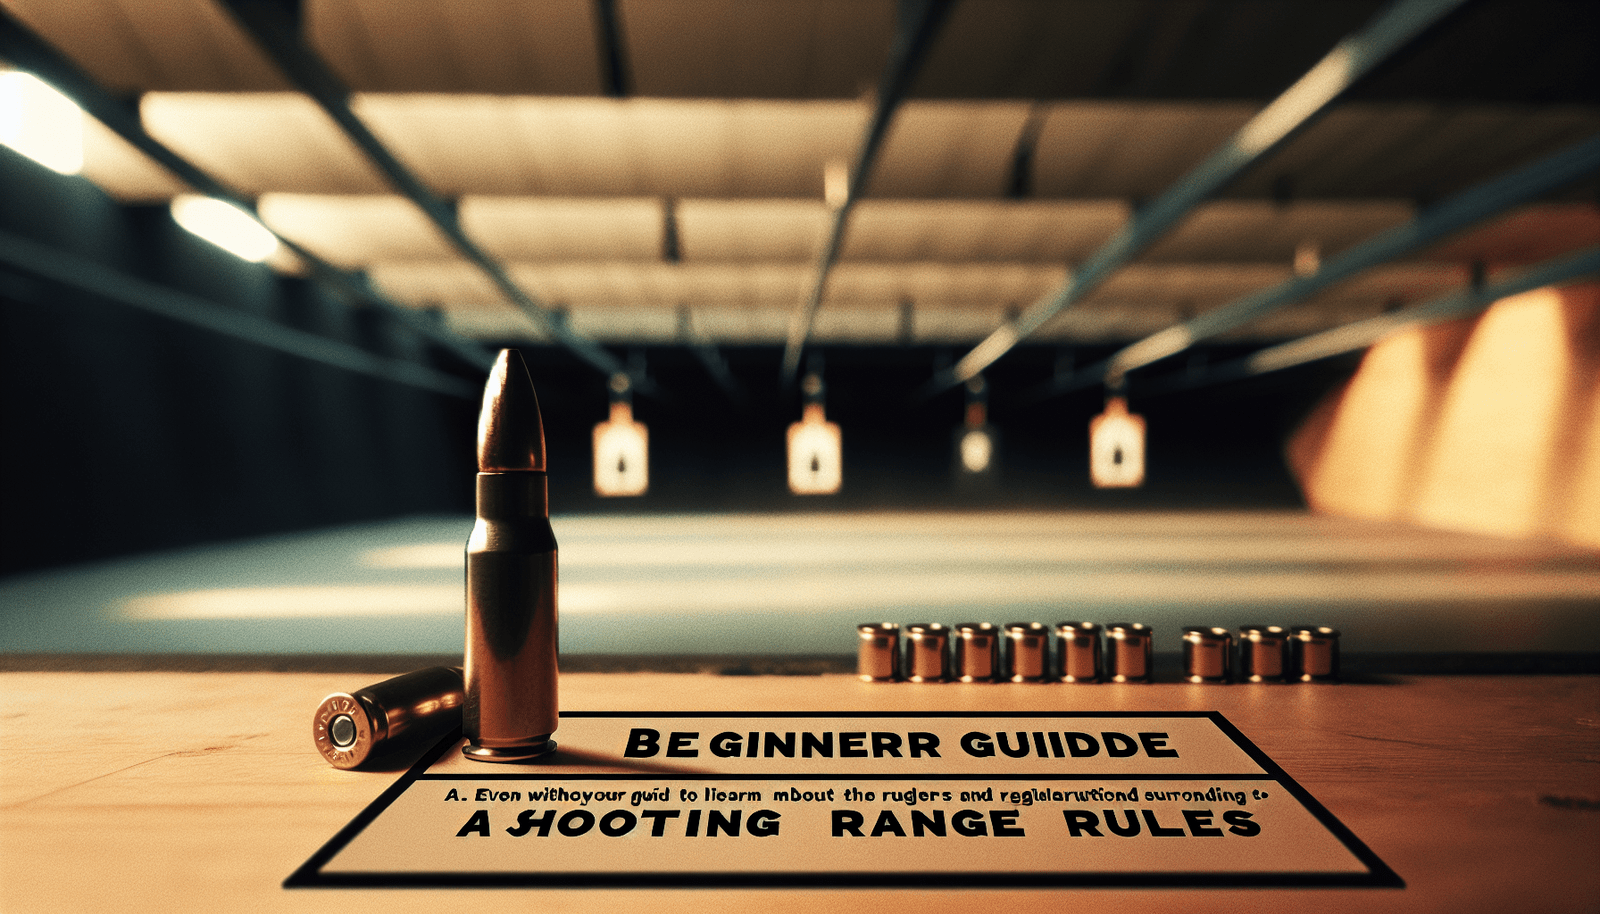 Beginner’s Guide To Shooting Range Rules